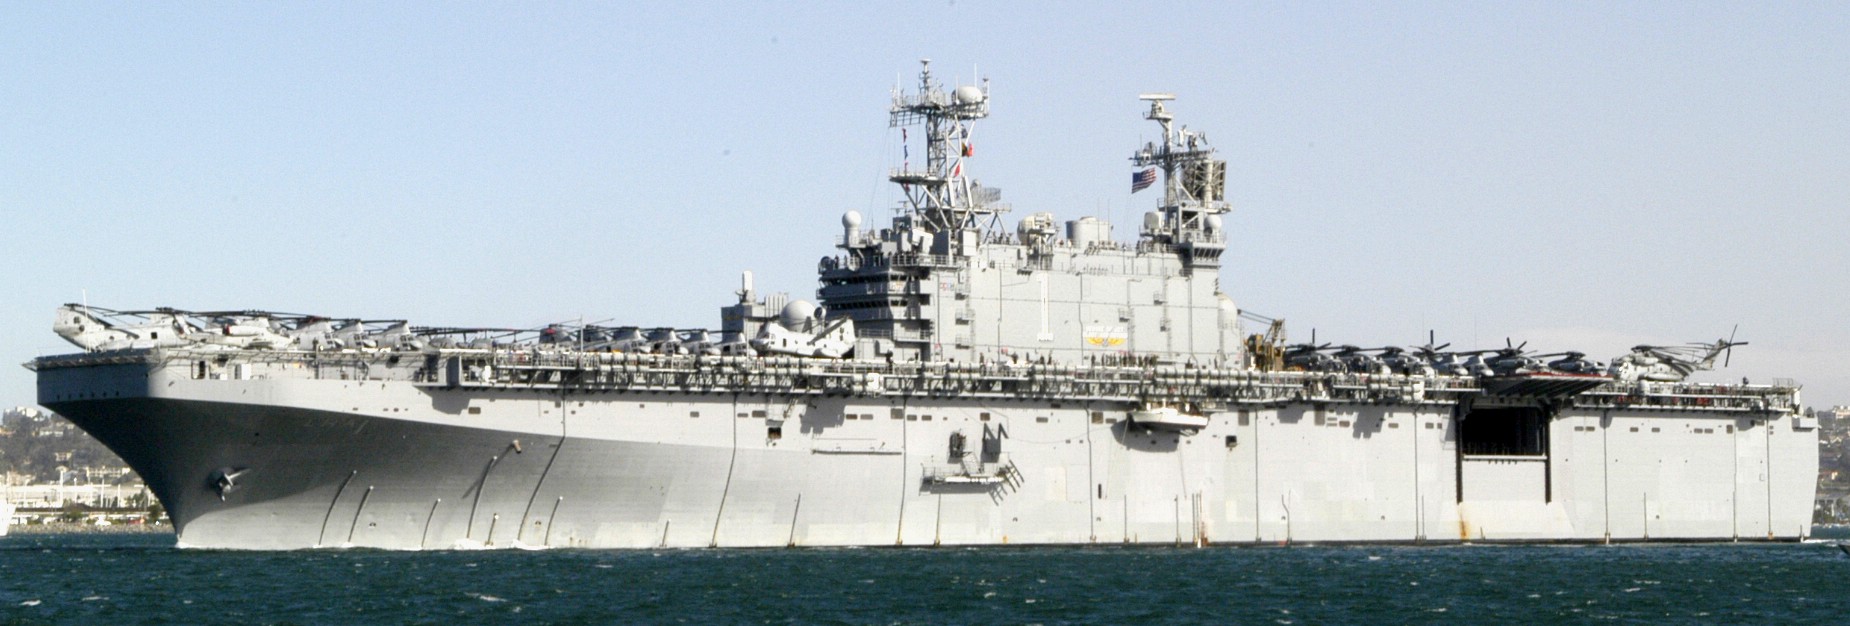 lha-1 uss tarawa amphibious assault ship us navy 15th meu soc marines hmm-161 rein exercise rimpac 02 15